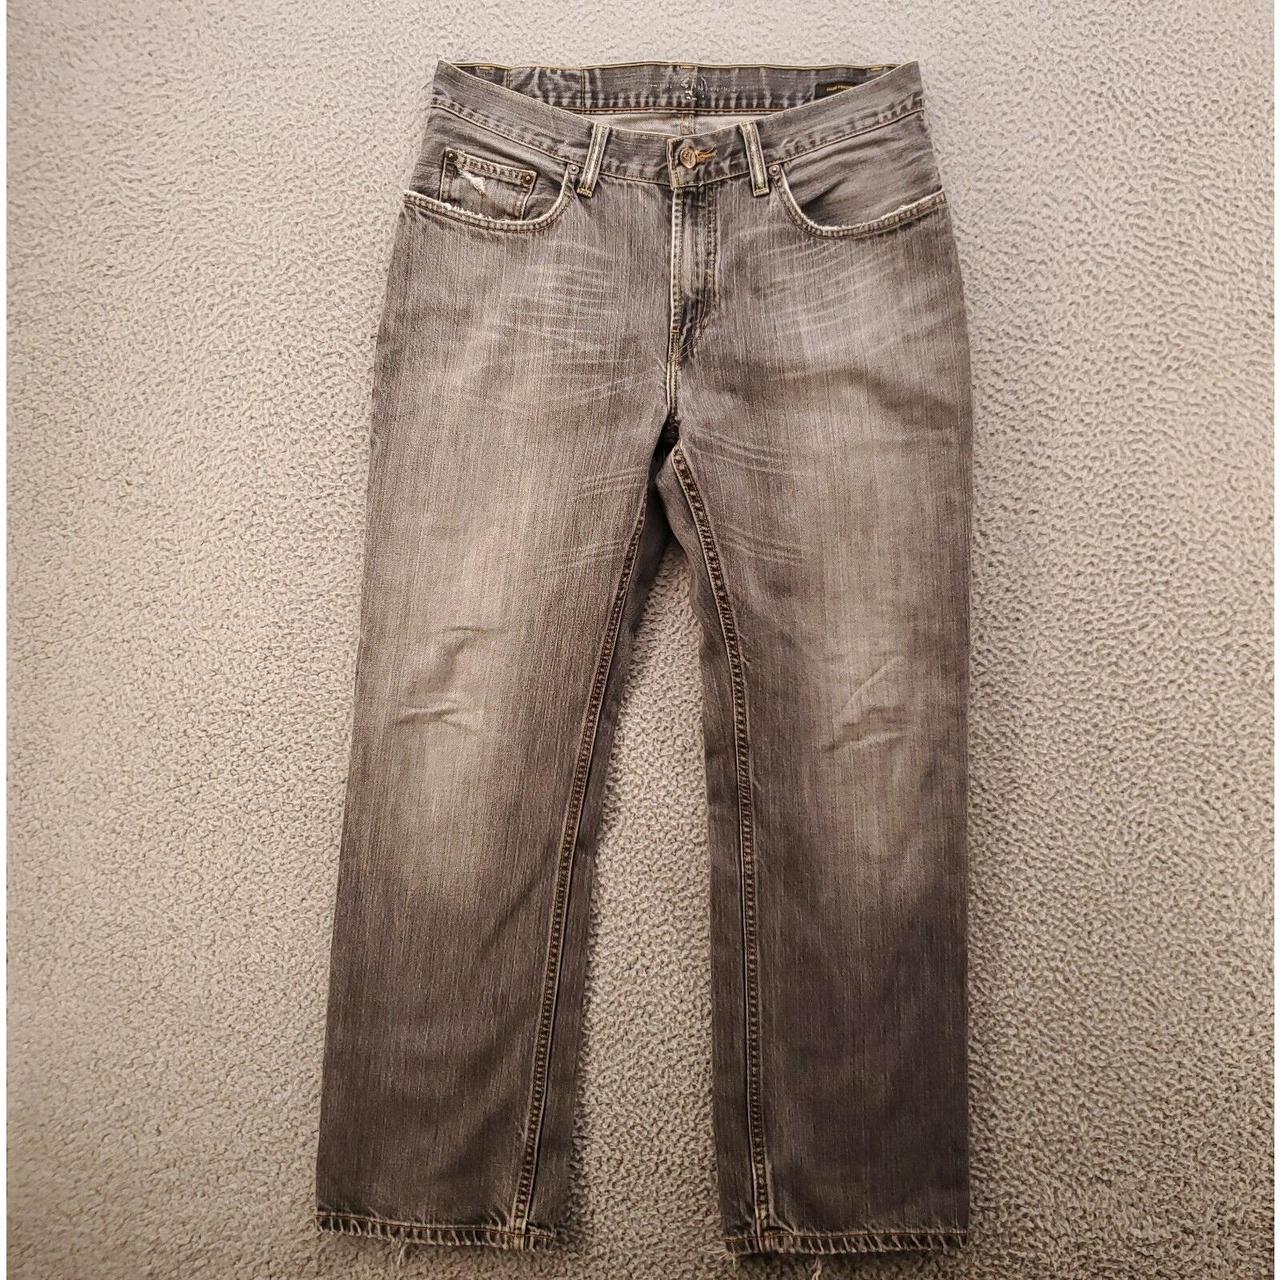 East West Jeans Mens 34x30 Hand Finished Gray/Black... - Depop